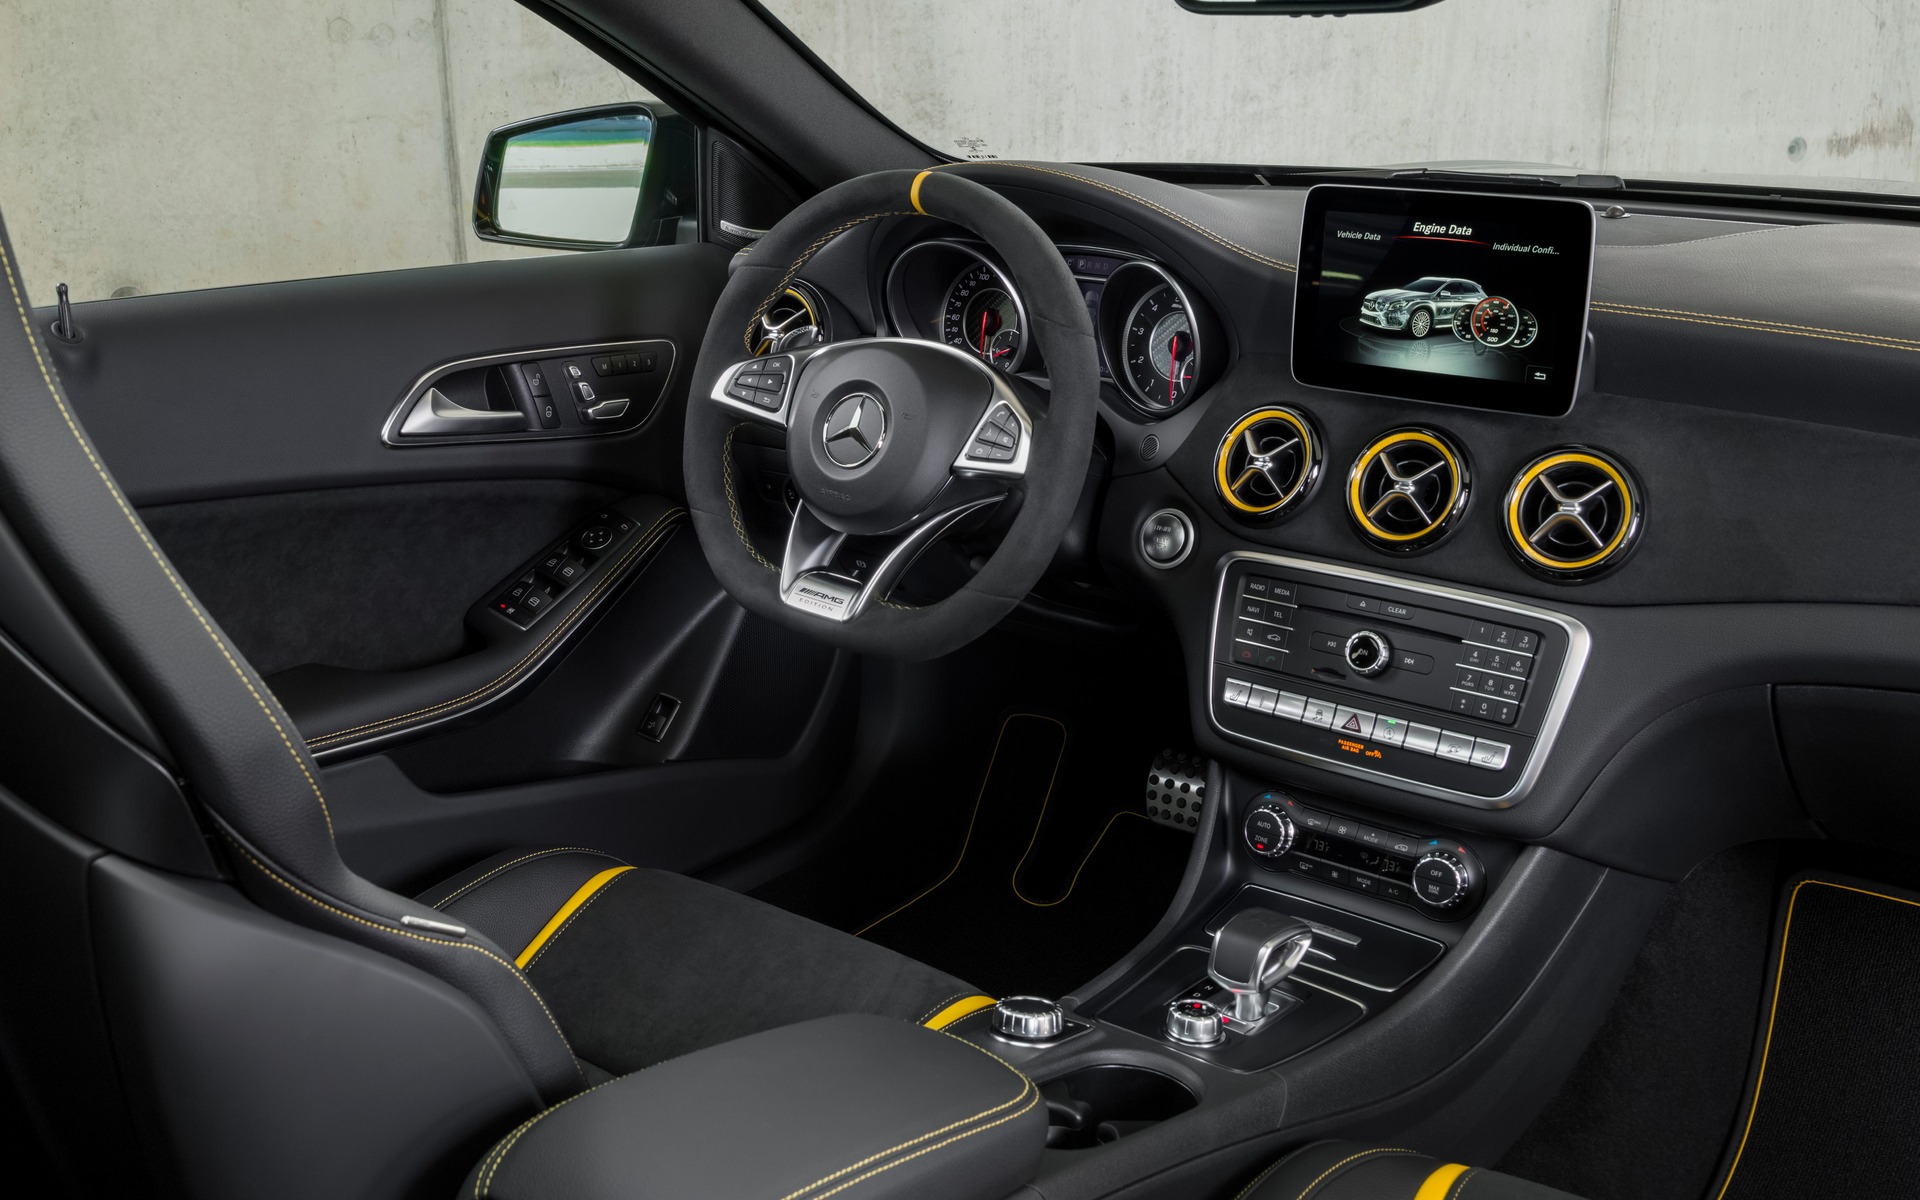 <p>Mercedes-AMG GLA 45 4MATIC 2018 avec l'ensemble Studio Performance.</p>